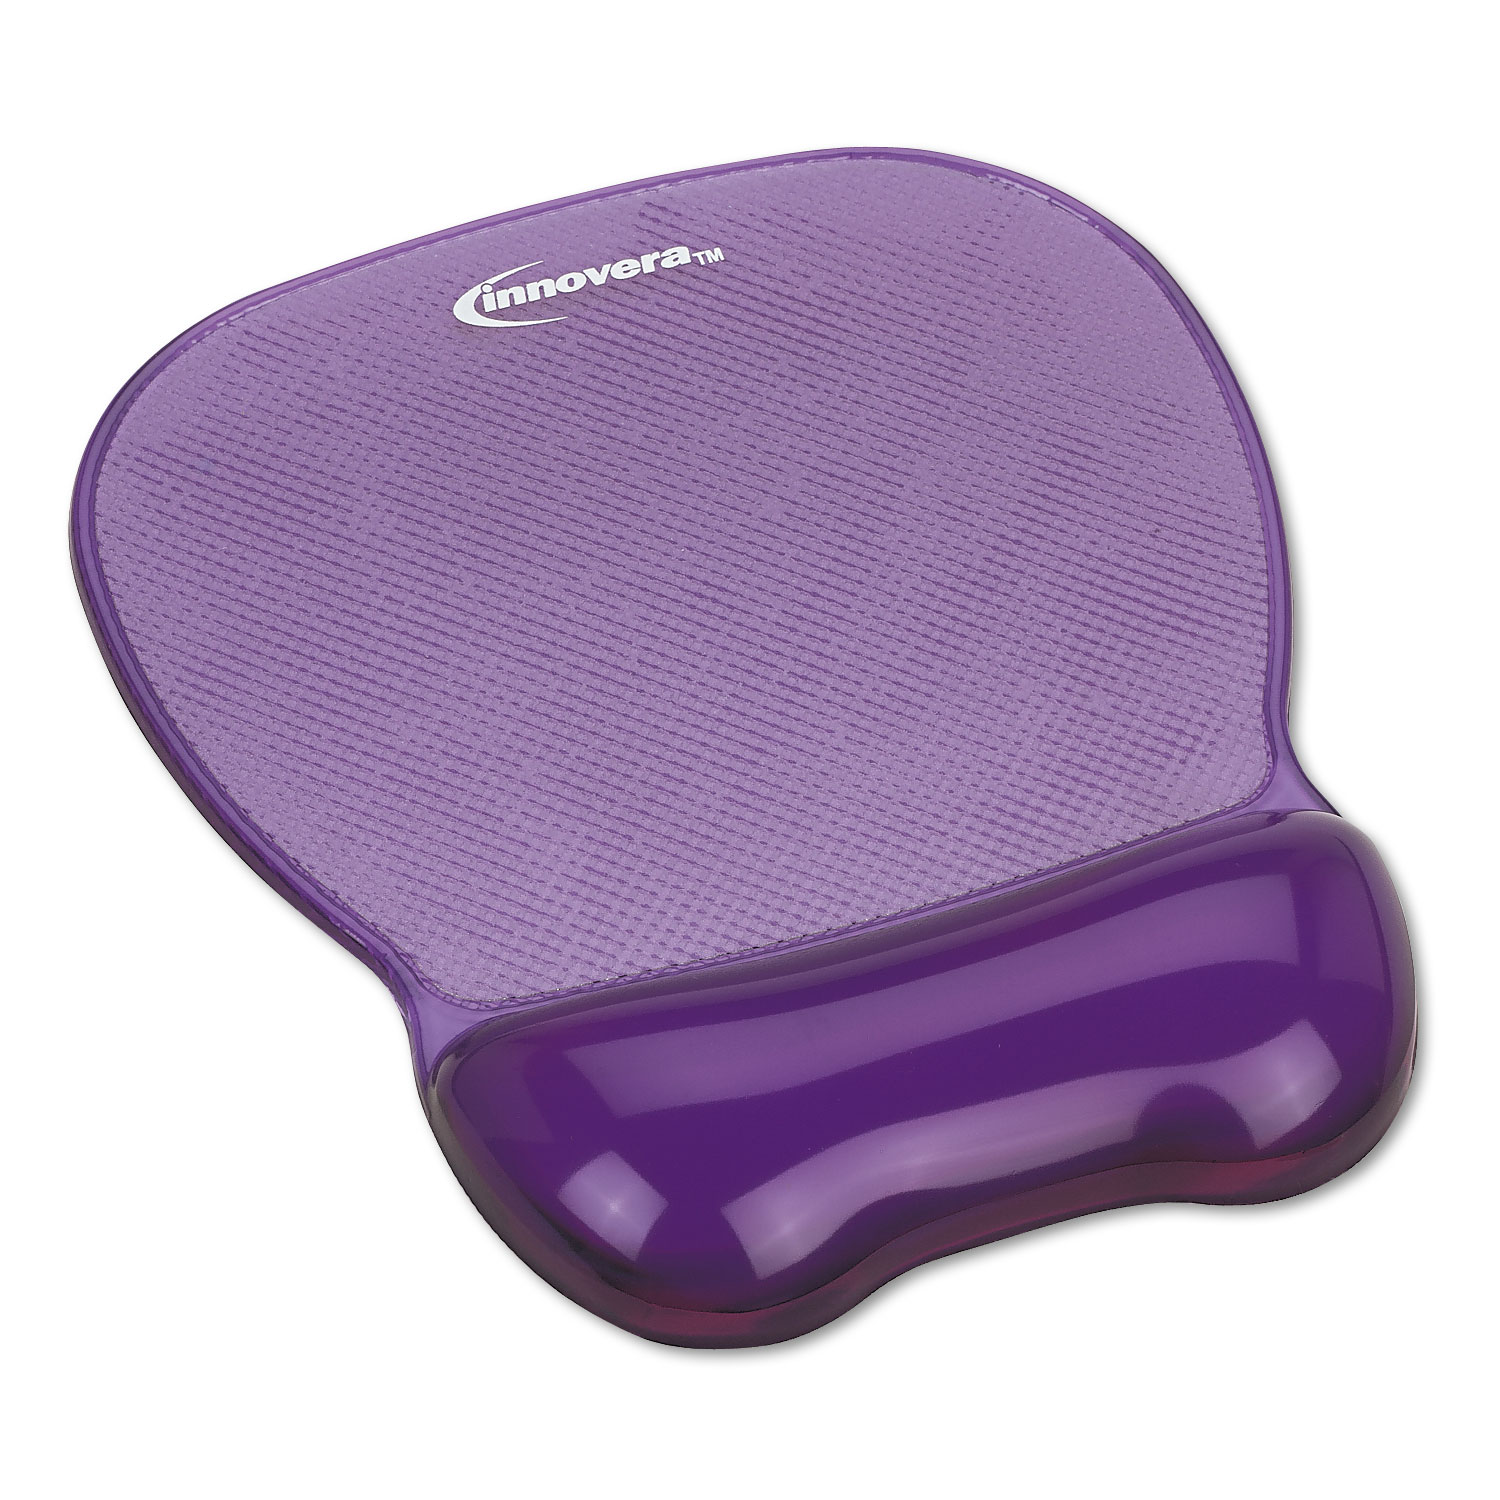  Innovera IVR51440 Gel Mouse Pad w/Wrist Rest, Nonskid Base, 8-1/4 x 9-5/8, Purple (IVR51440) 